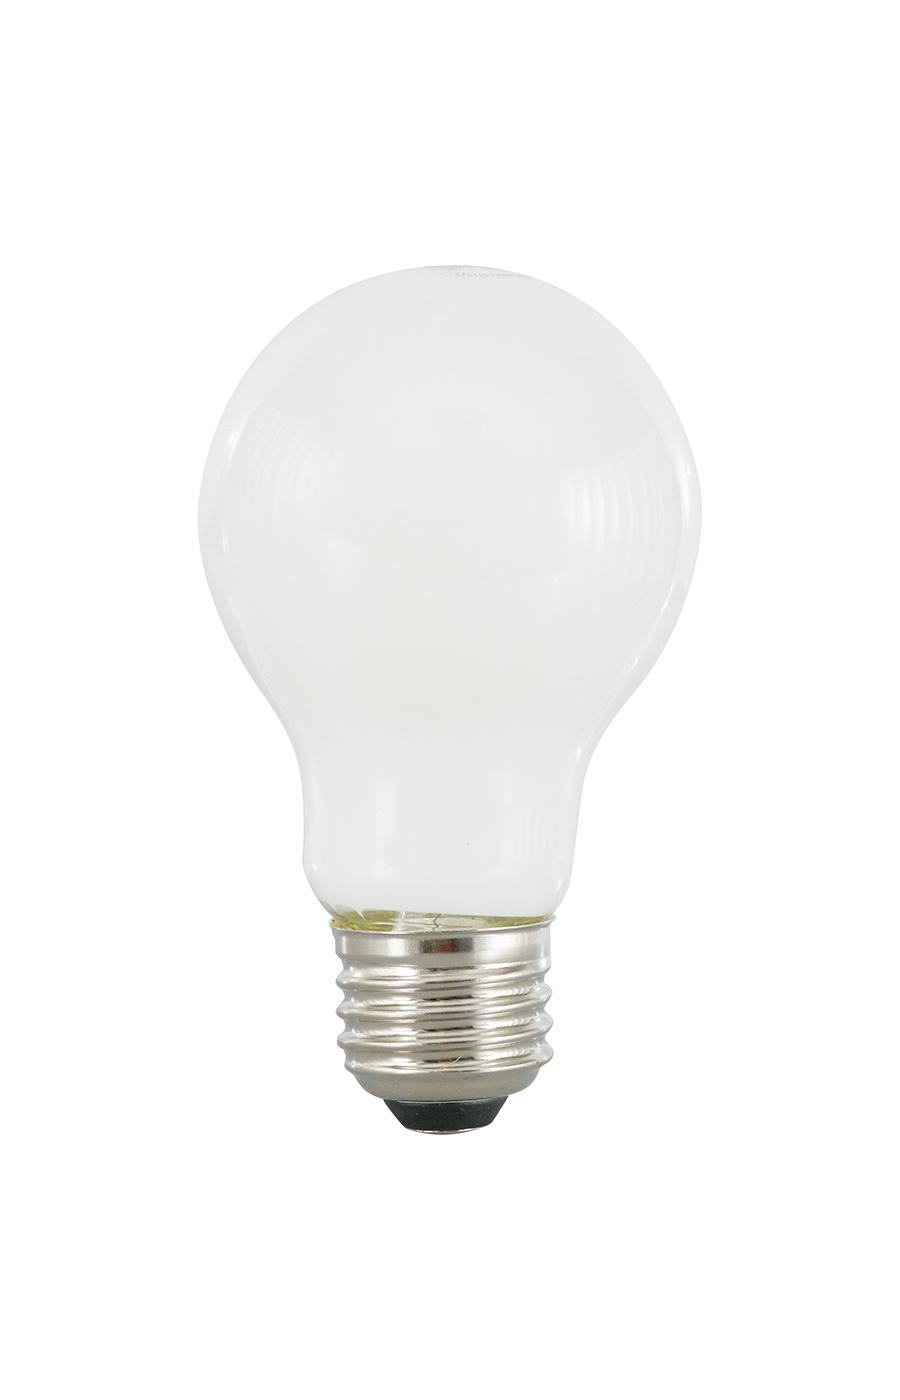 Sylvania TruWave A19 60-Watt Frosted LED Light Bulbs - Daylight; image 2 of 2